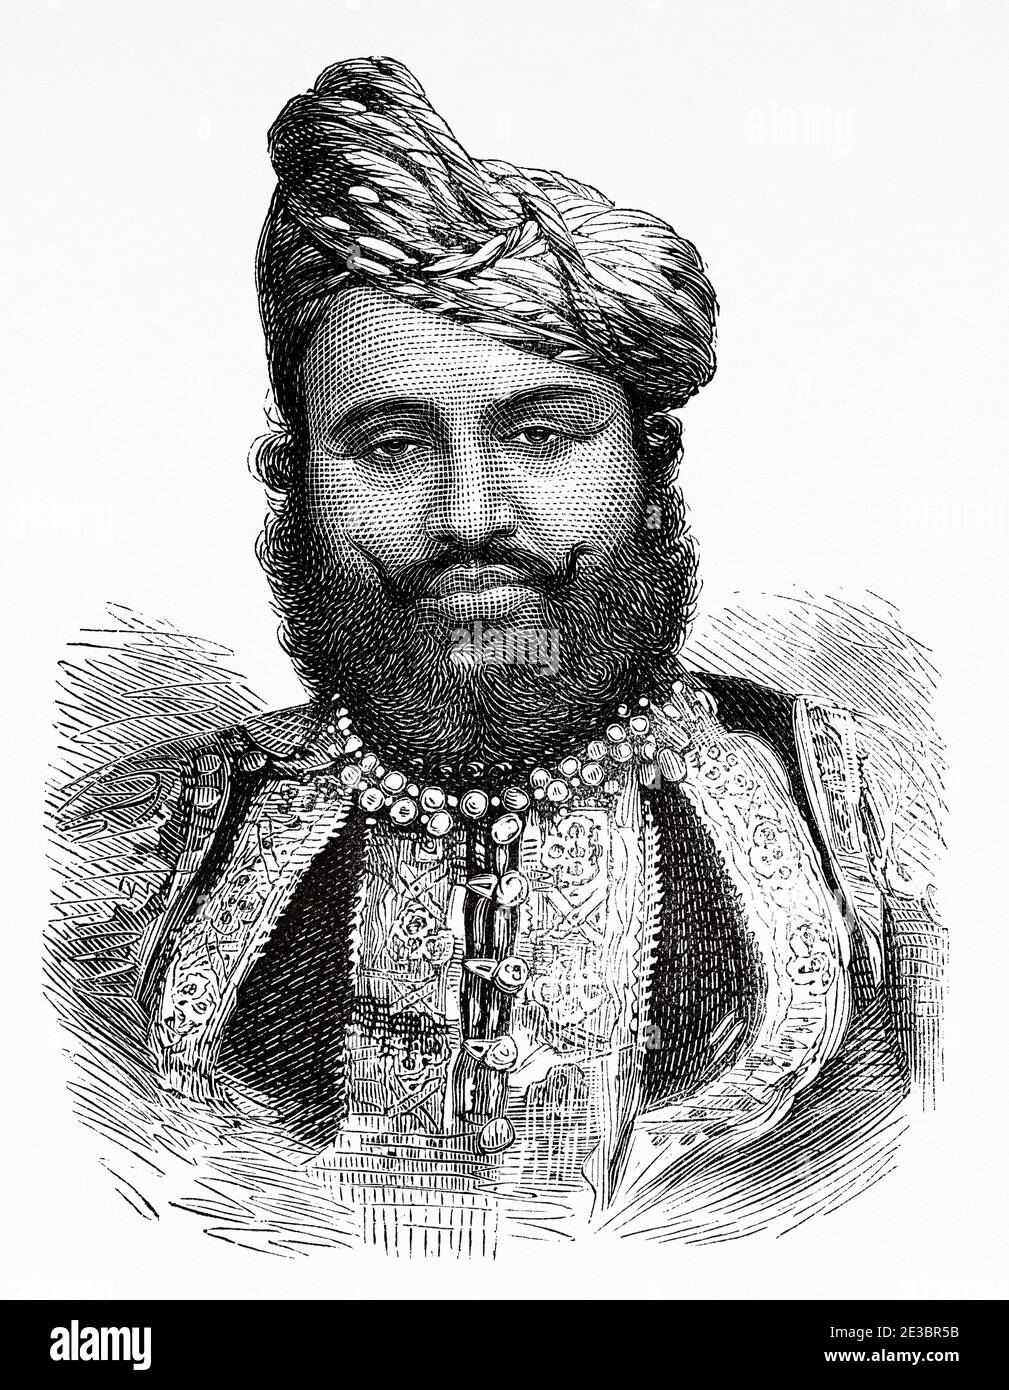 Portrait of Mohubut Khanjee Nawab of Junagarh or Junagadh, state of Gujarat in India. Old engraving illustration Prince of Wales Albert Edward tour of India. El Mundo en la Mano 1878 Stock Photo